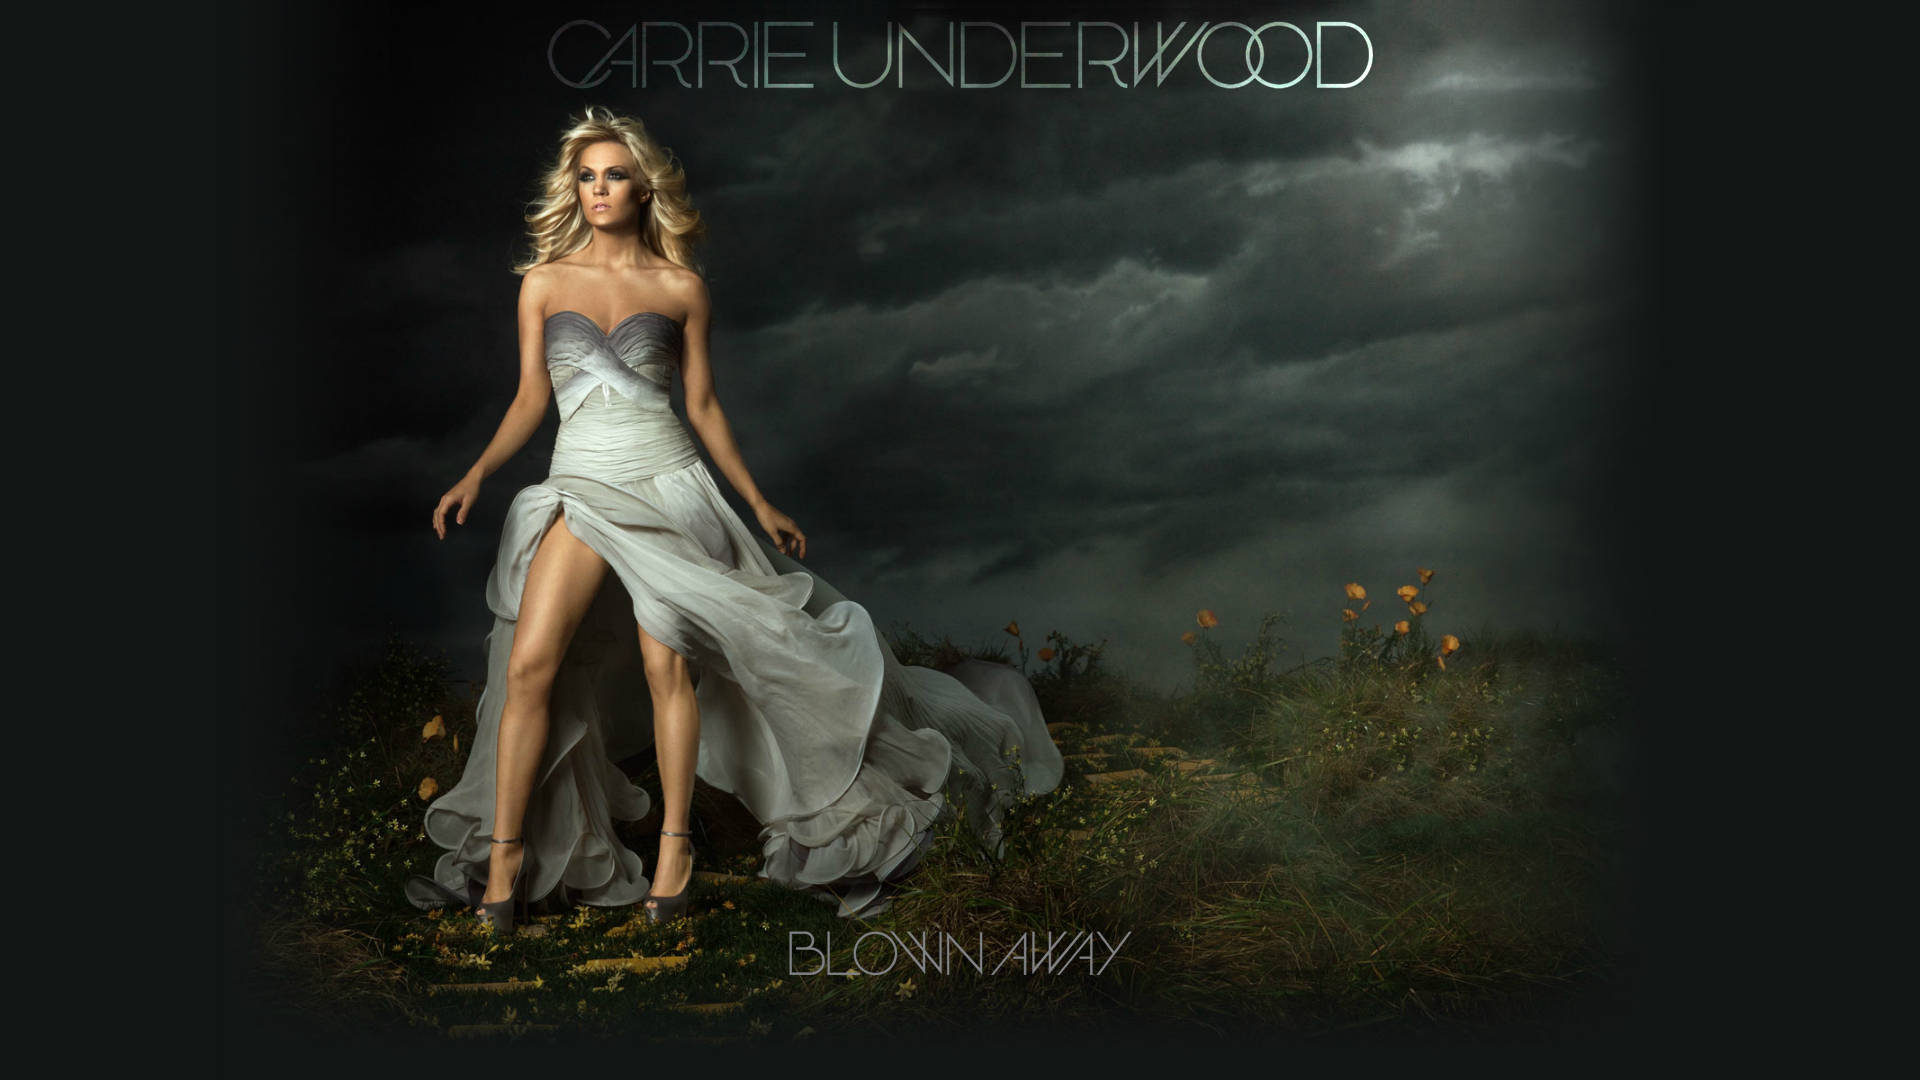 Carrie Underwood Blown Away Background